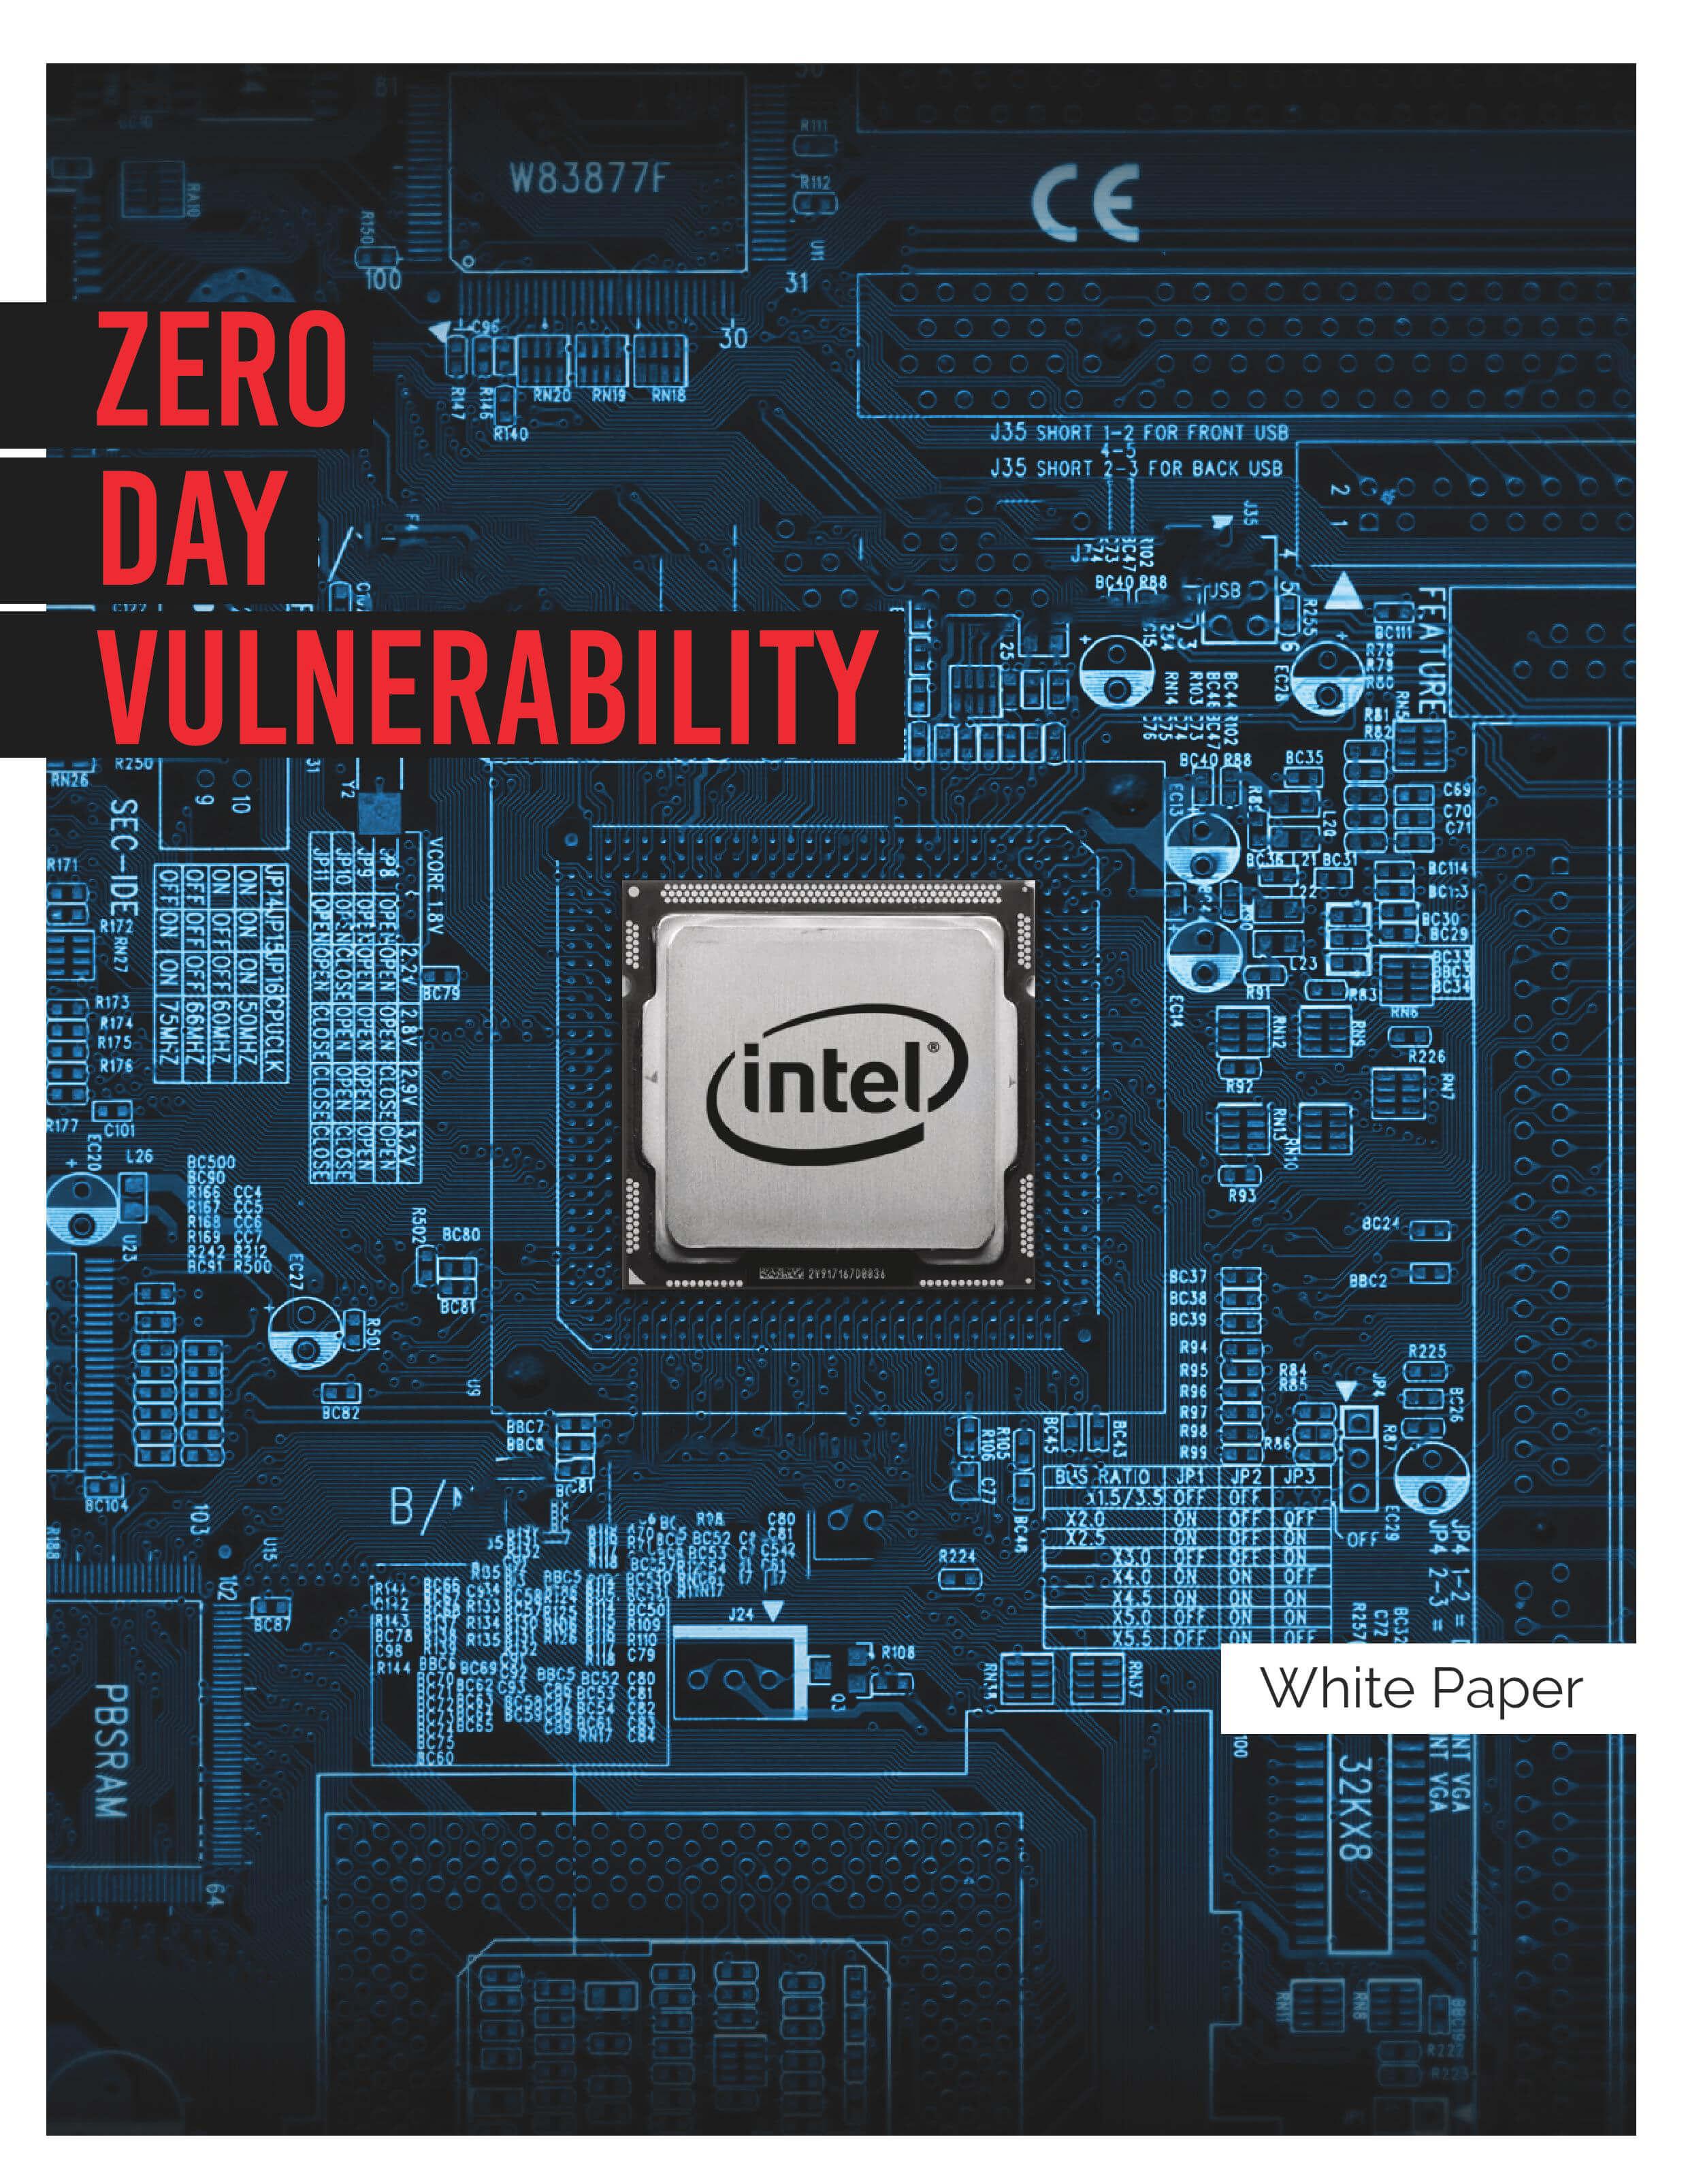 Intel Zero Day Vulnerability